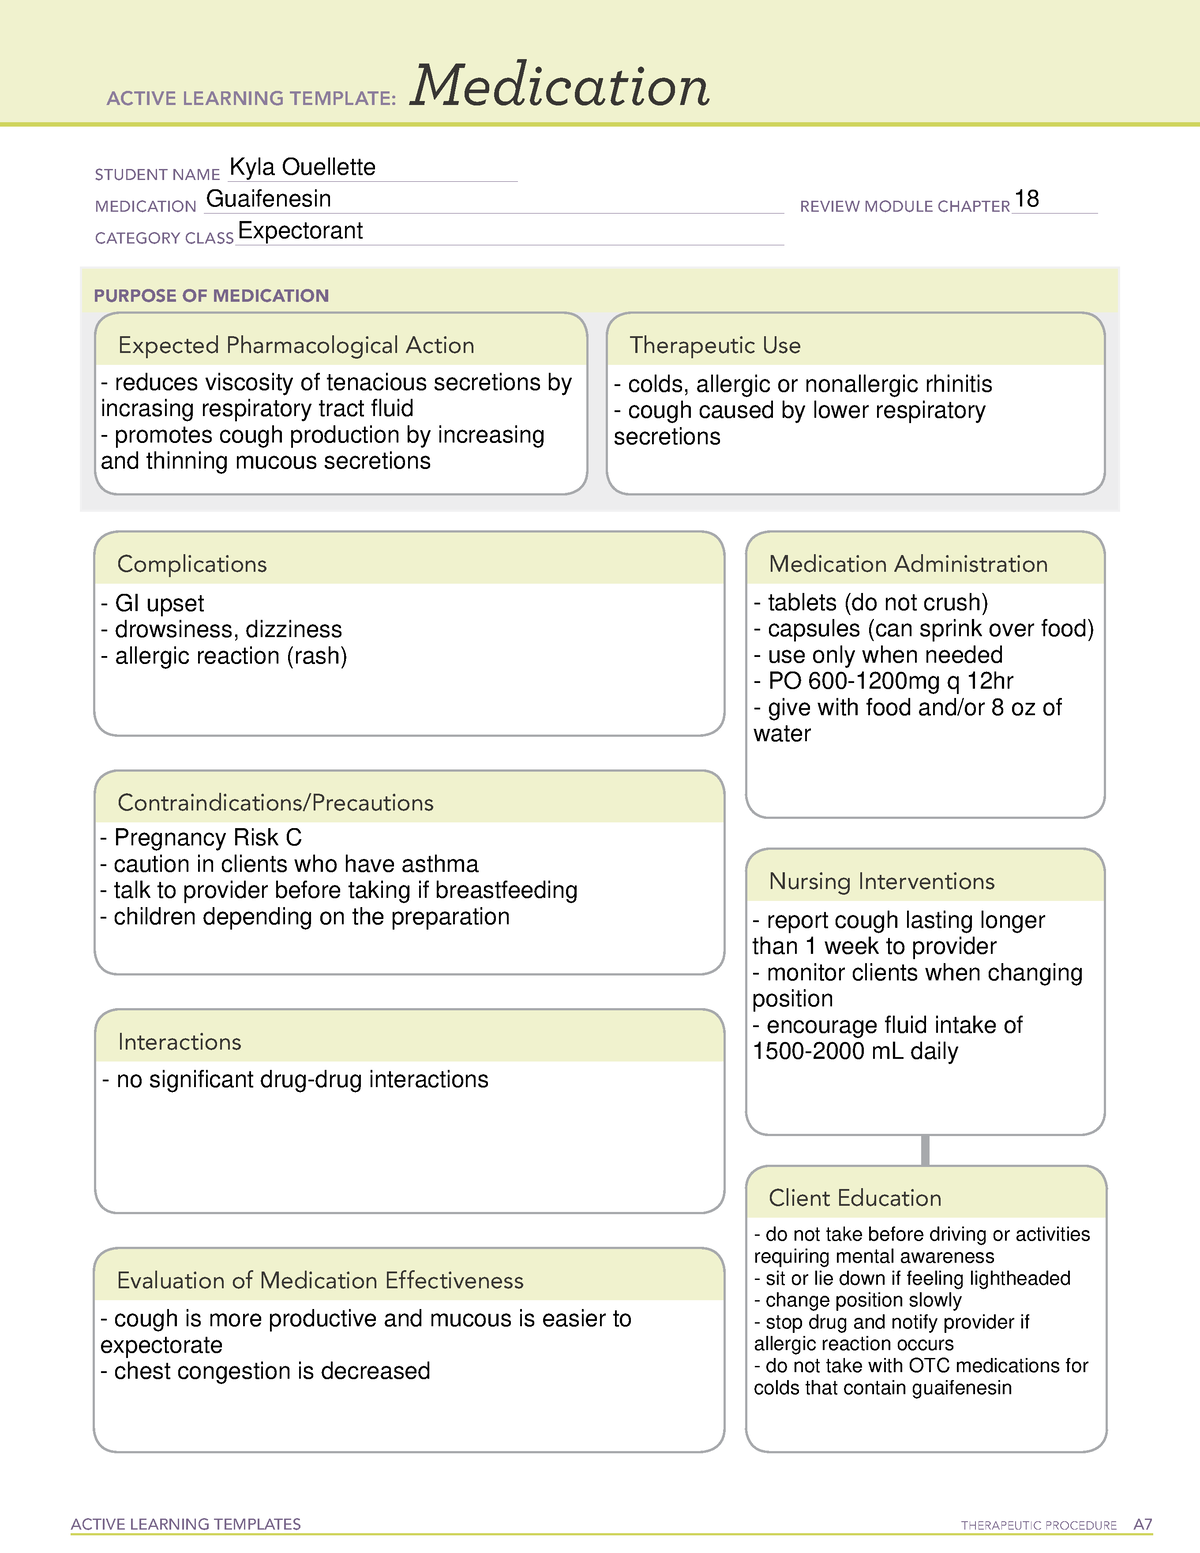 Guaifenesin ATI Medication template ACTIVE LEARNING TEMPLATES